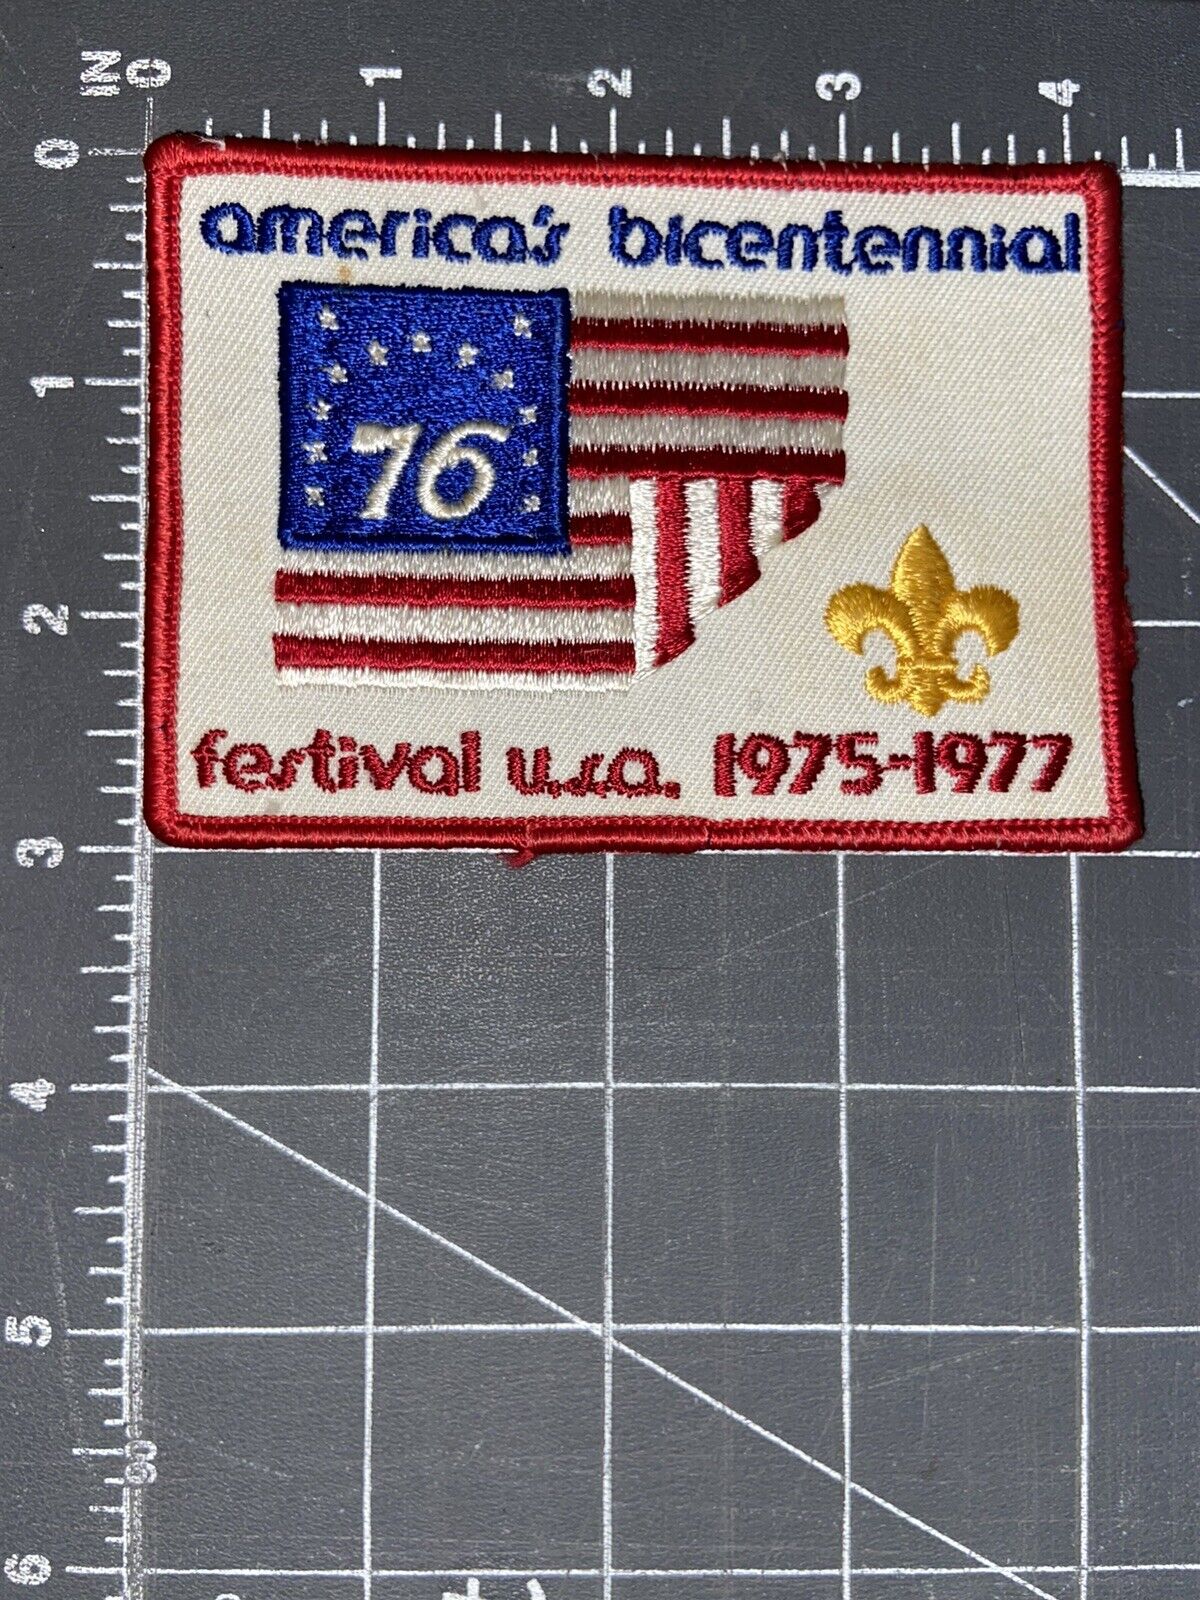 Vintage America’s Bicentennial Festival USA 1975-1977 Patch 1776 1976 Boy Scouts